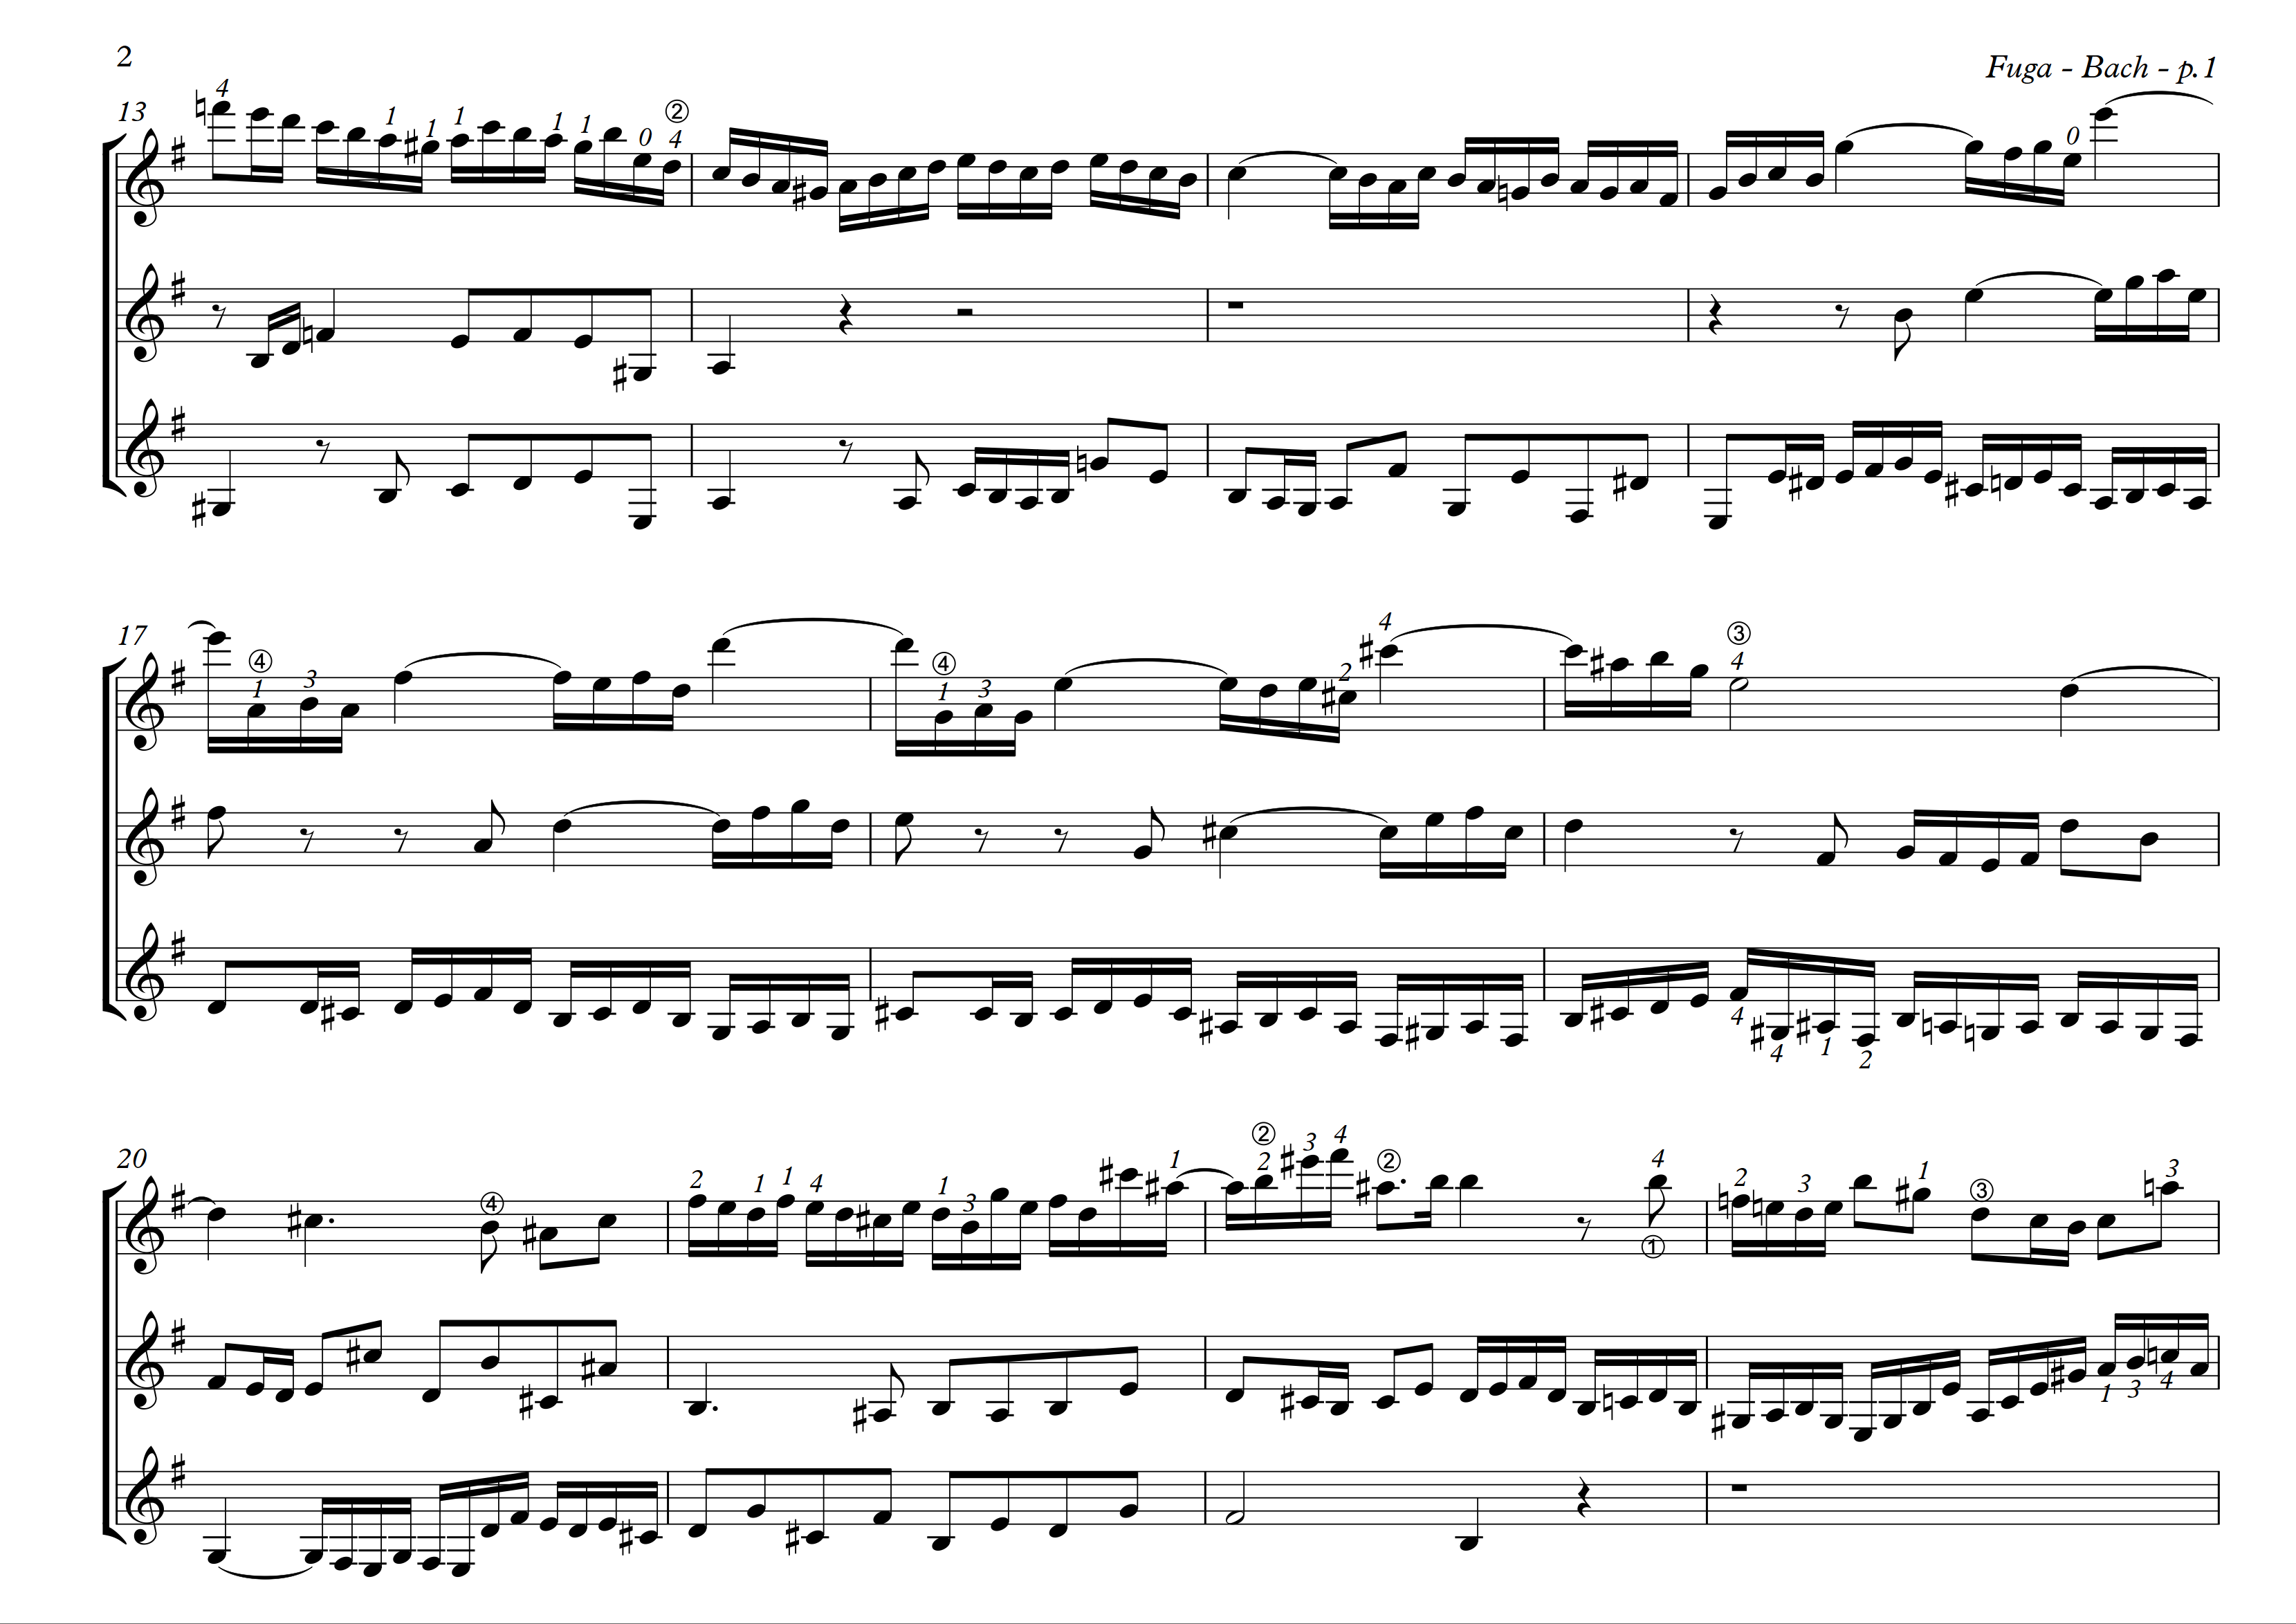 Fuga - Bach - Maximo Barbieri -2